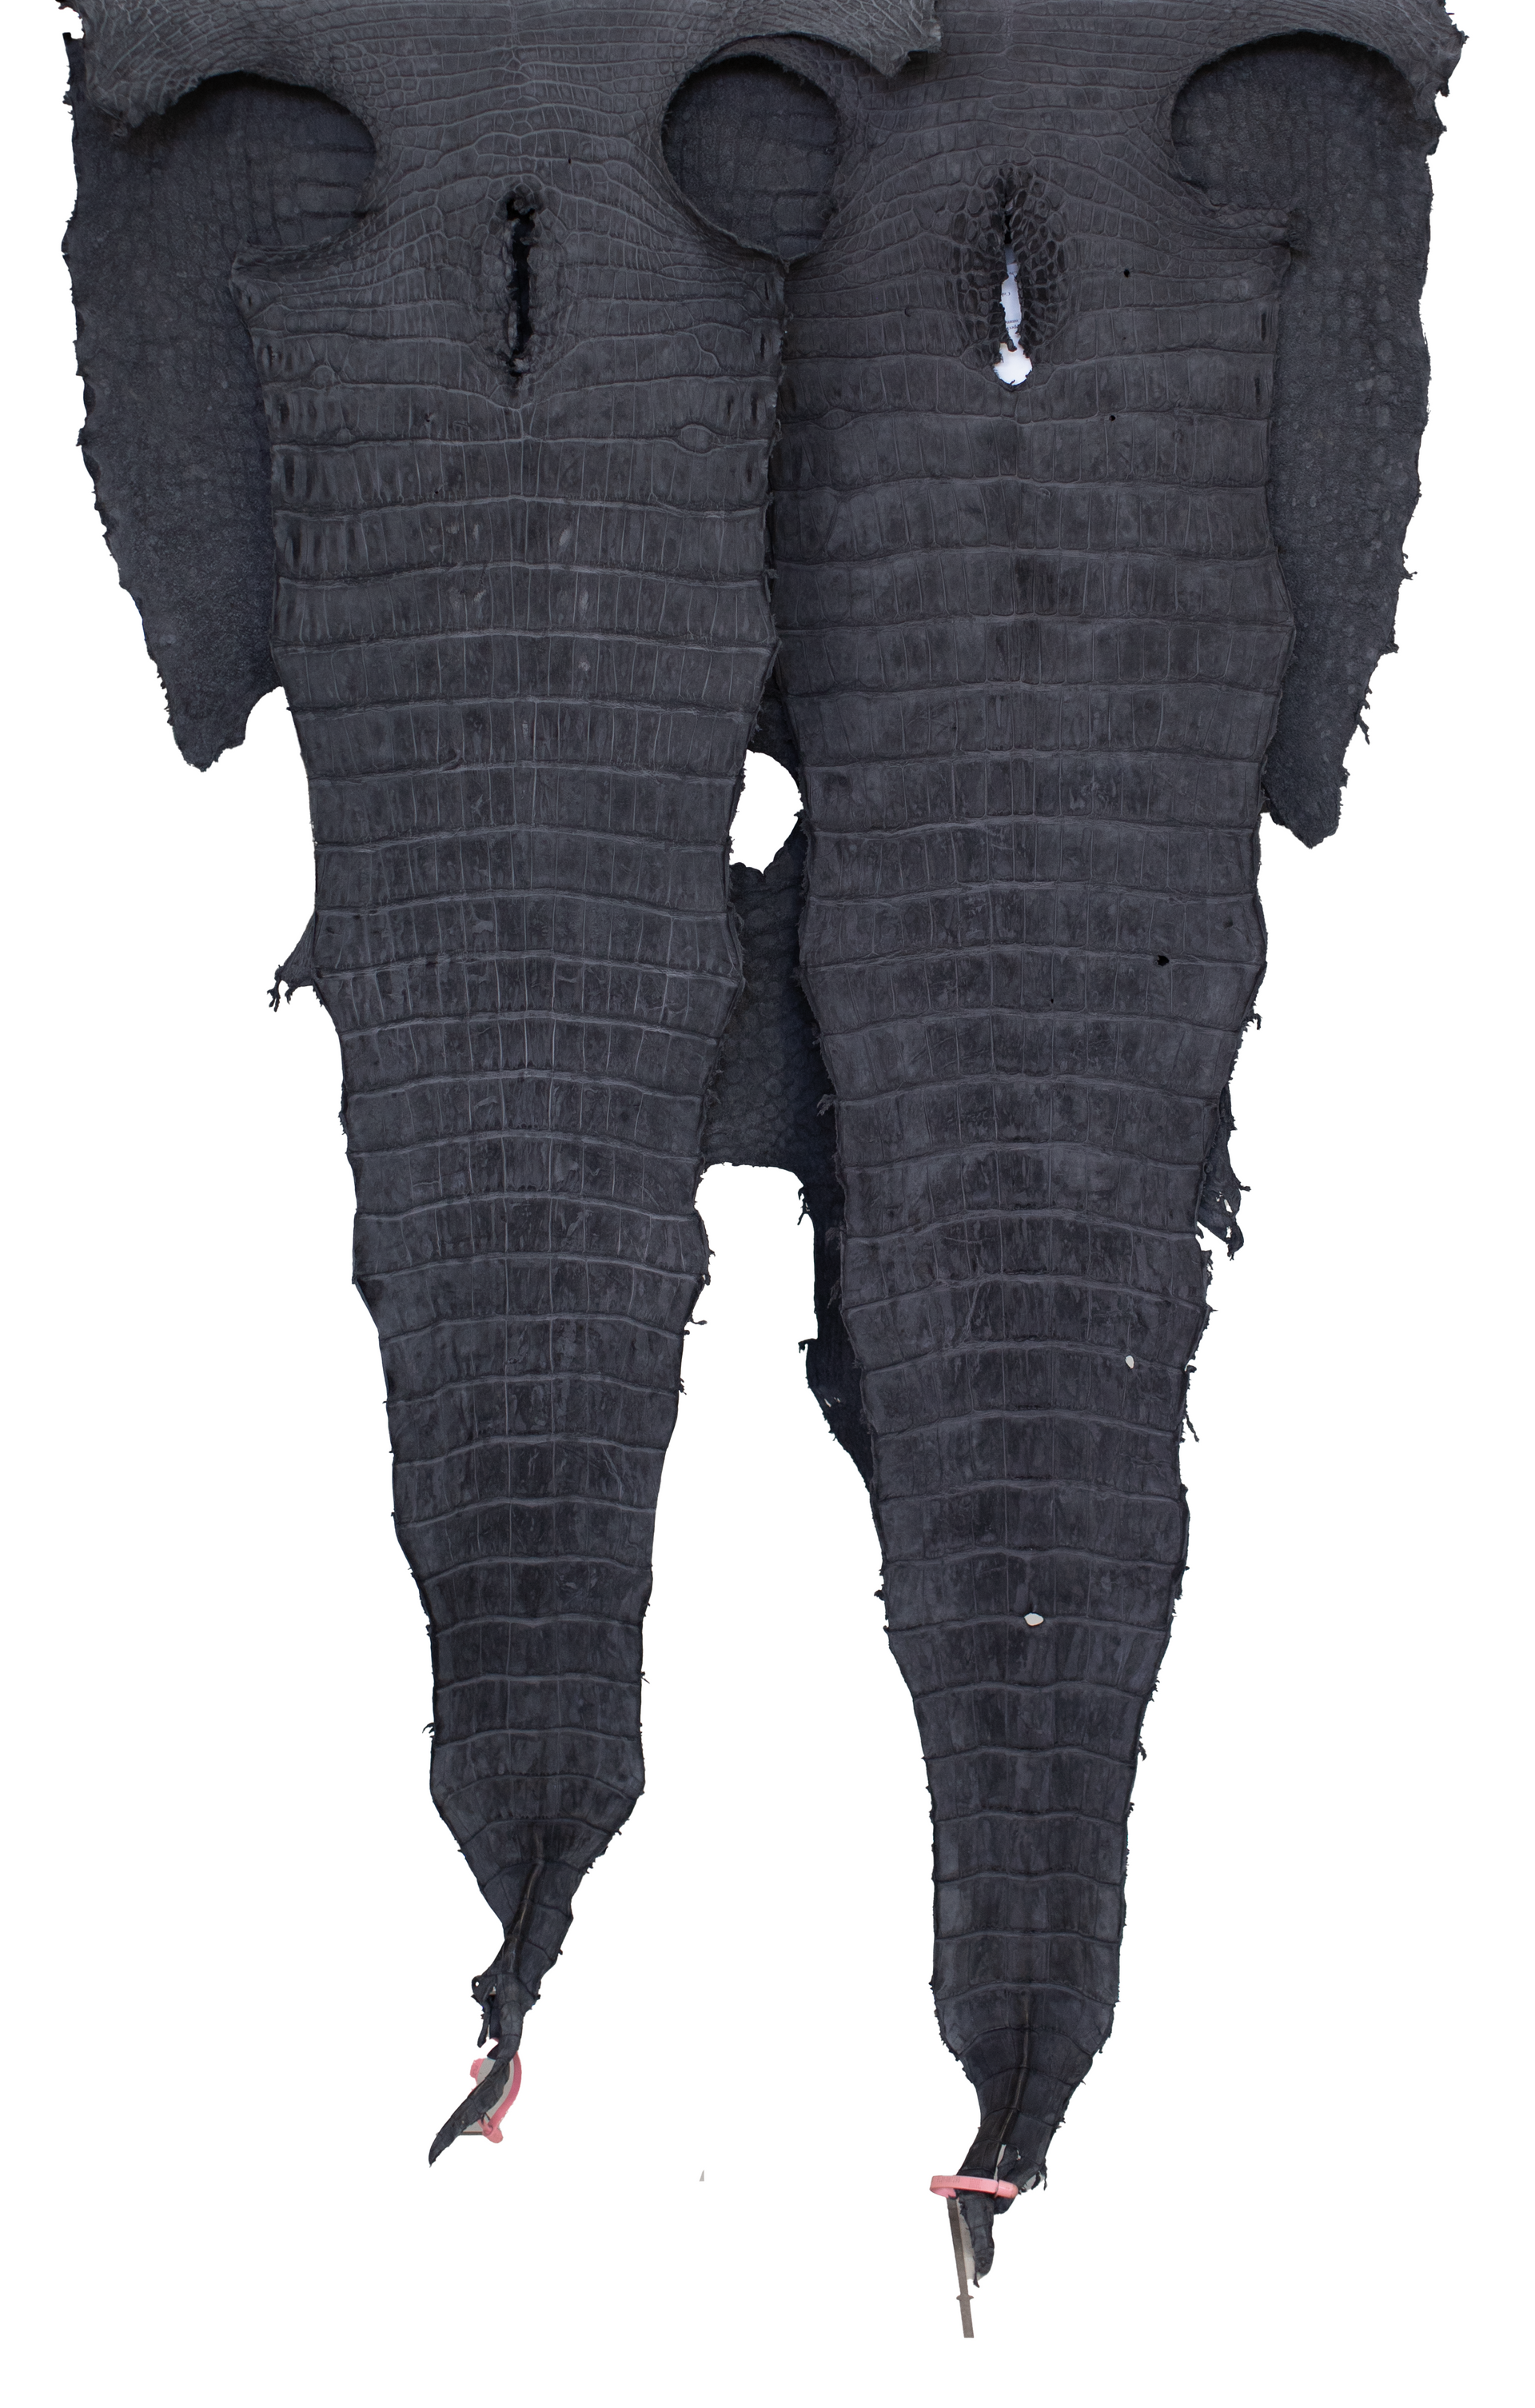 65+ cm Grade 3/4 Anthracite Nubuck Wild American Alligator Leather